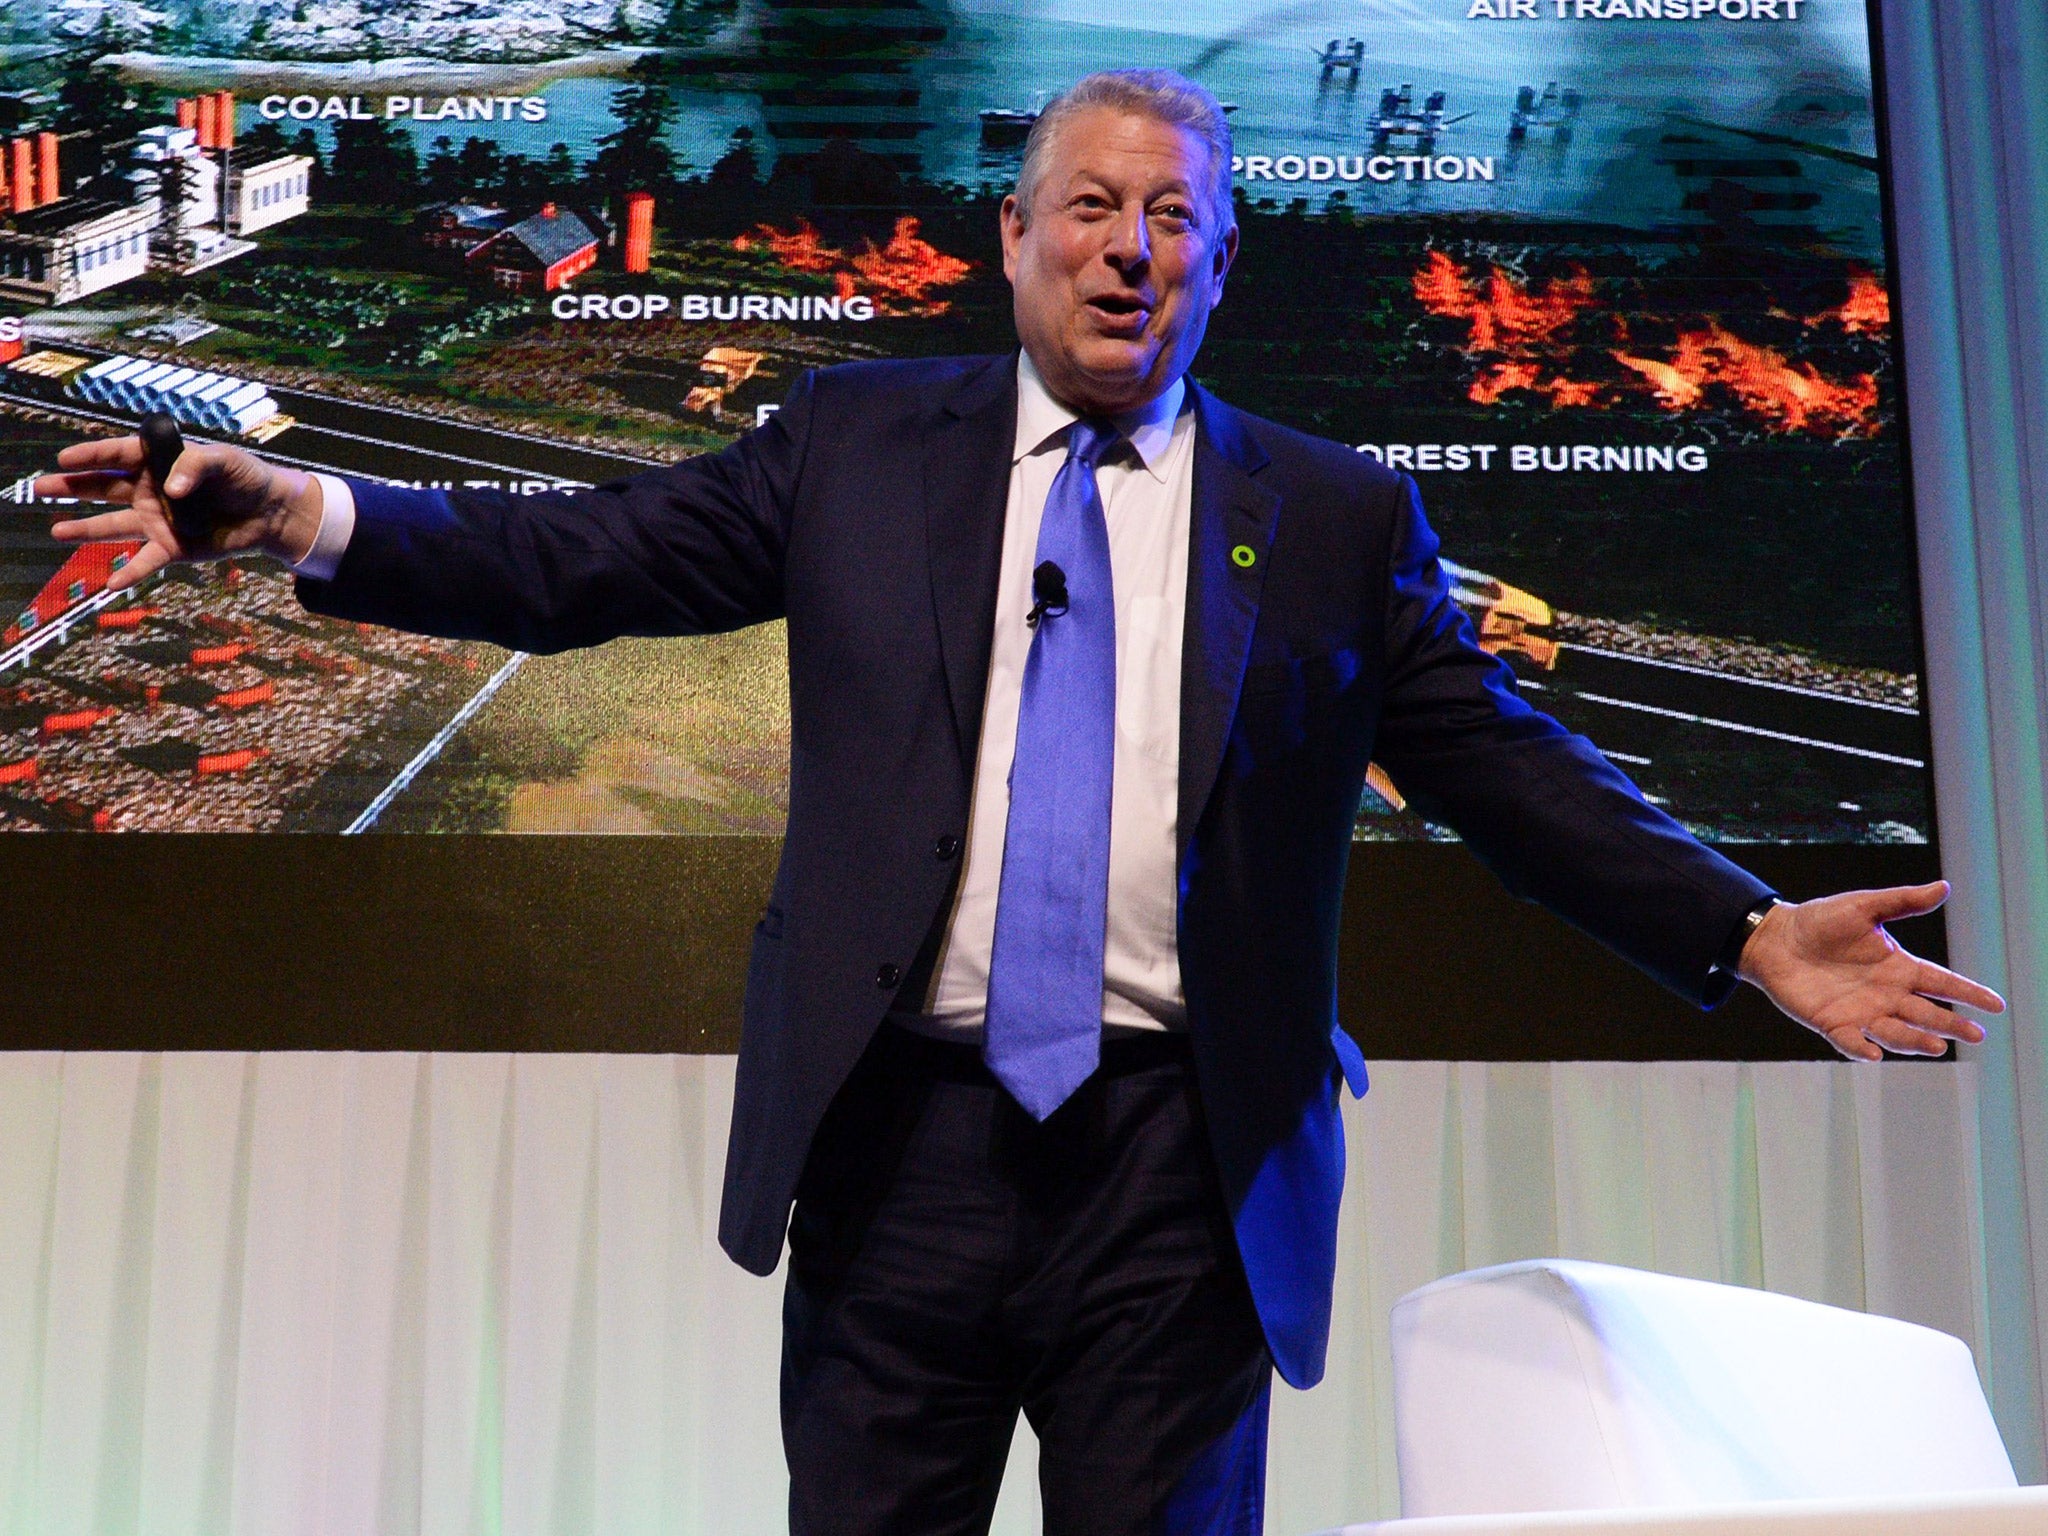 Al Gore's new climate change film will open the Sundance Film Festival in January